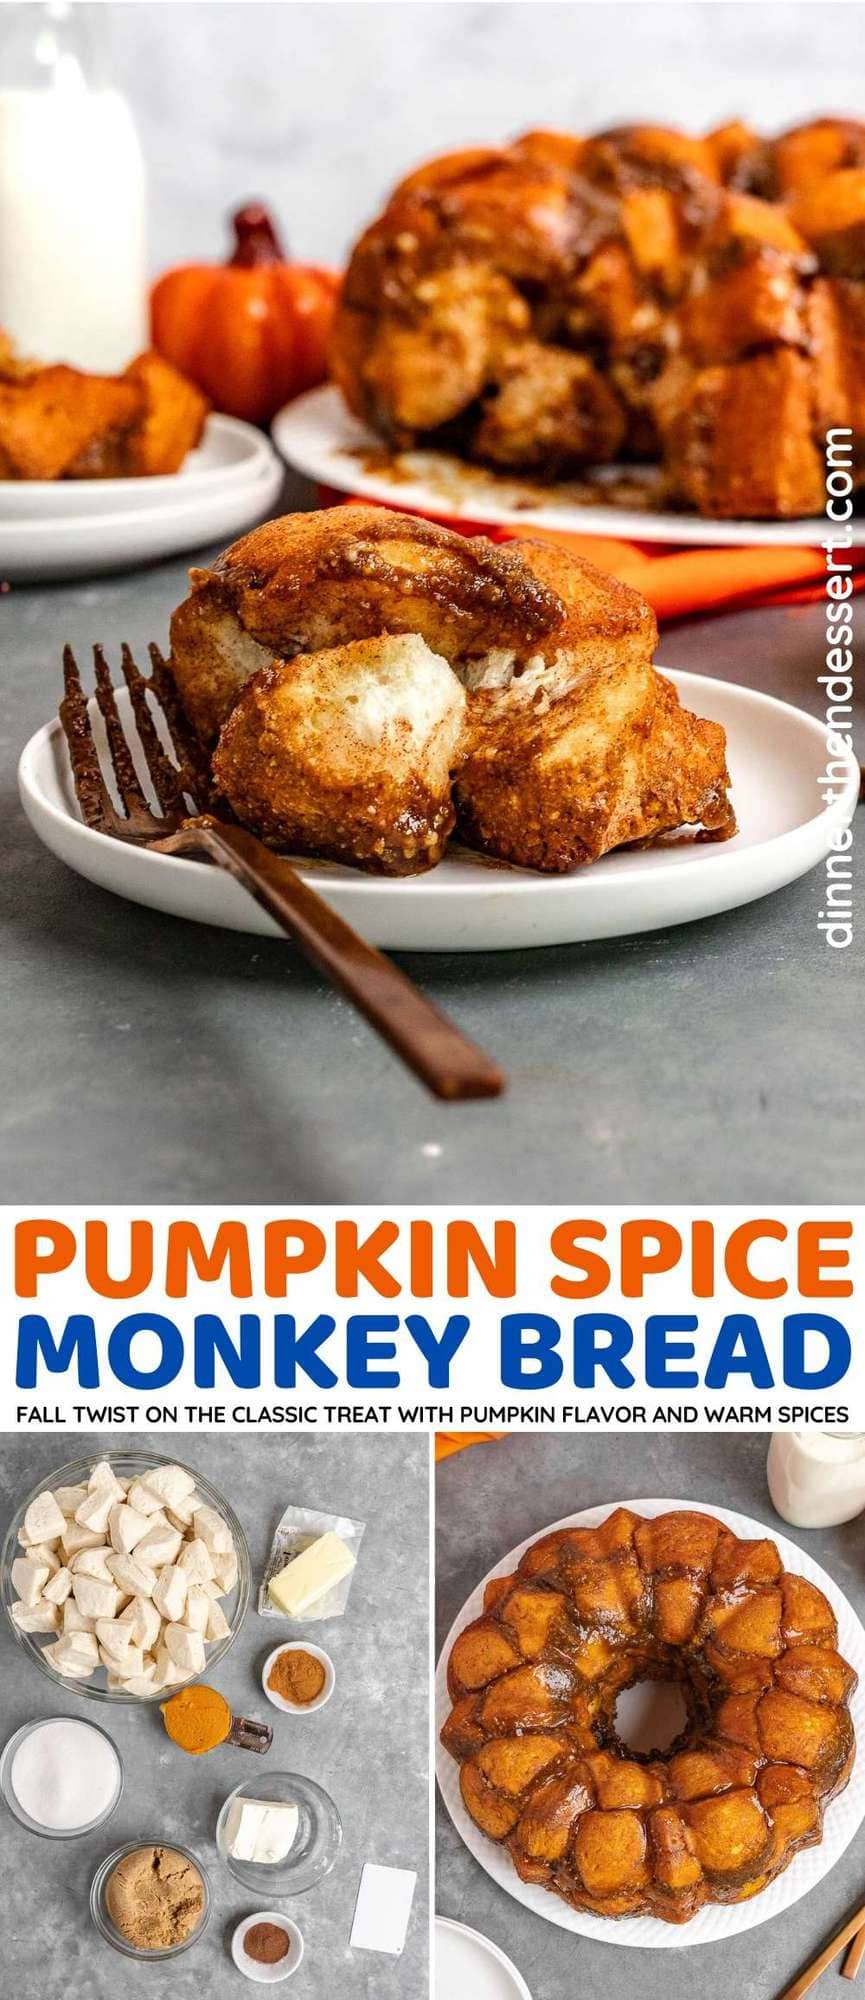 Pumpkin Spice Monkey Bread collage